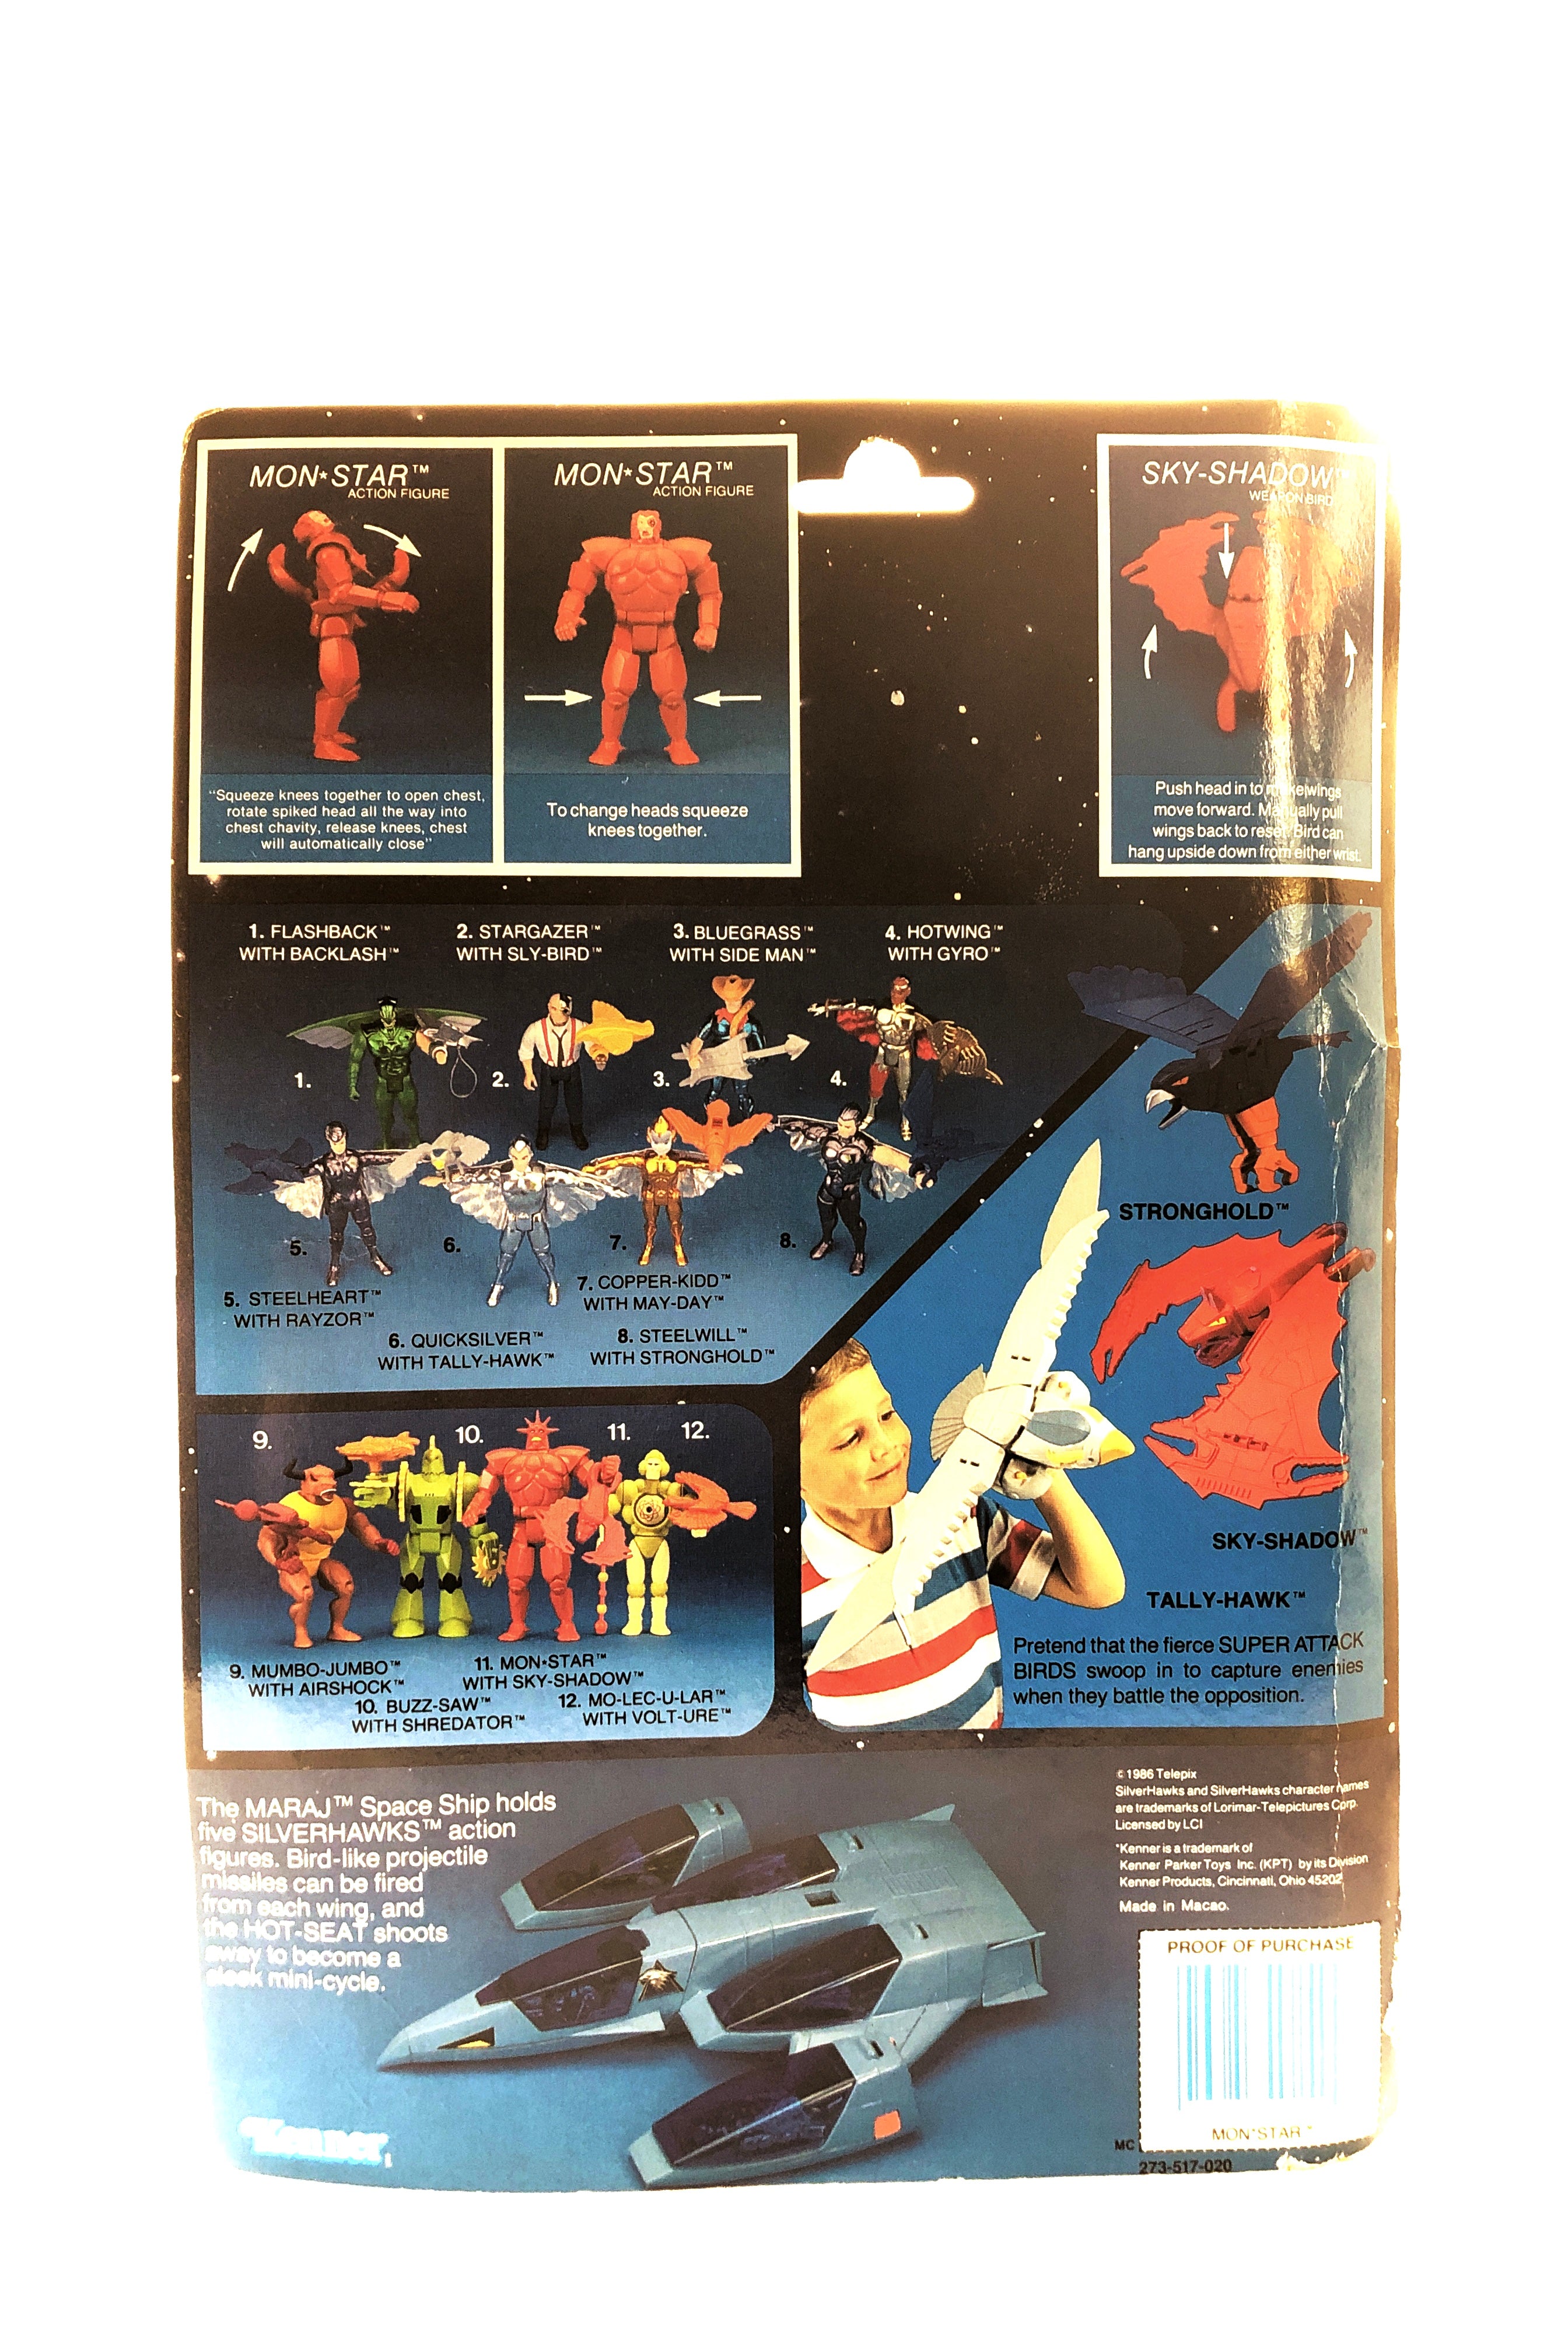 Silverhawks: Monstar with Skyshadow (Kenner, 1986)-3